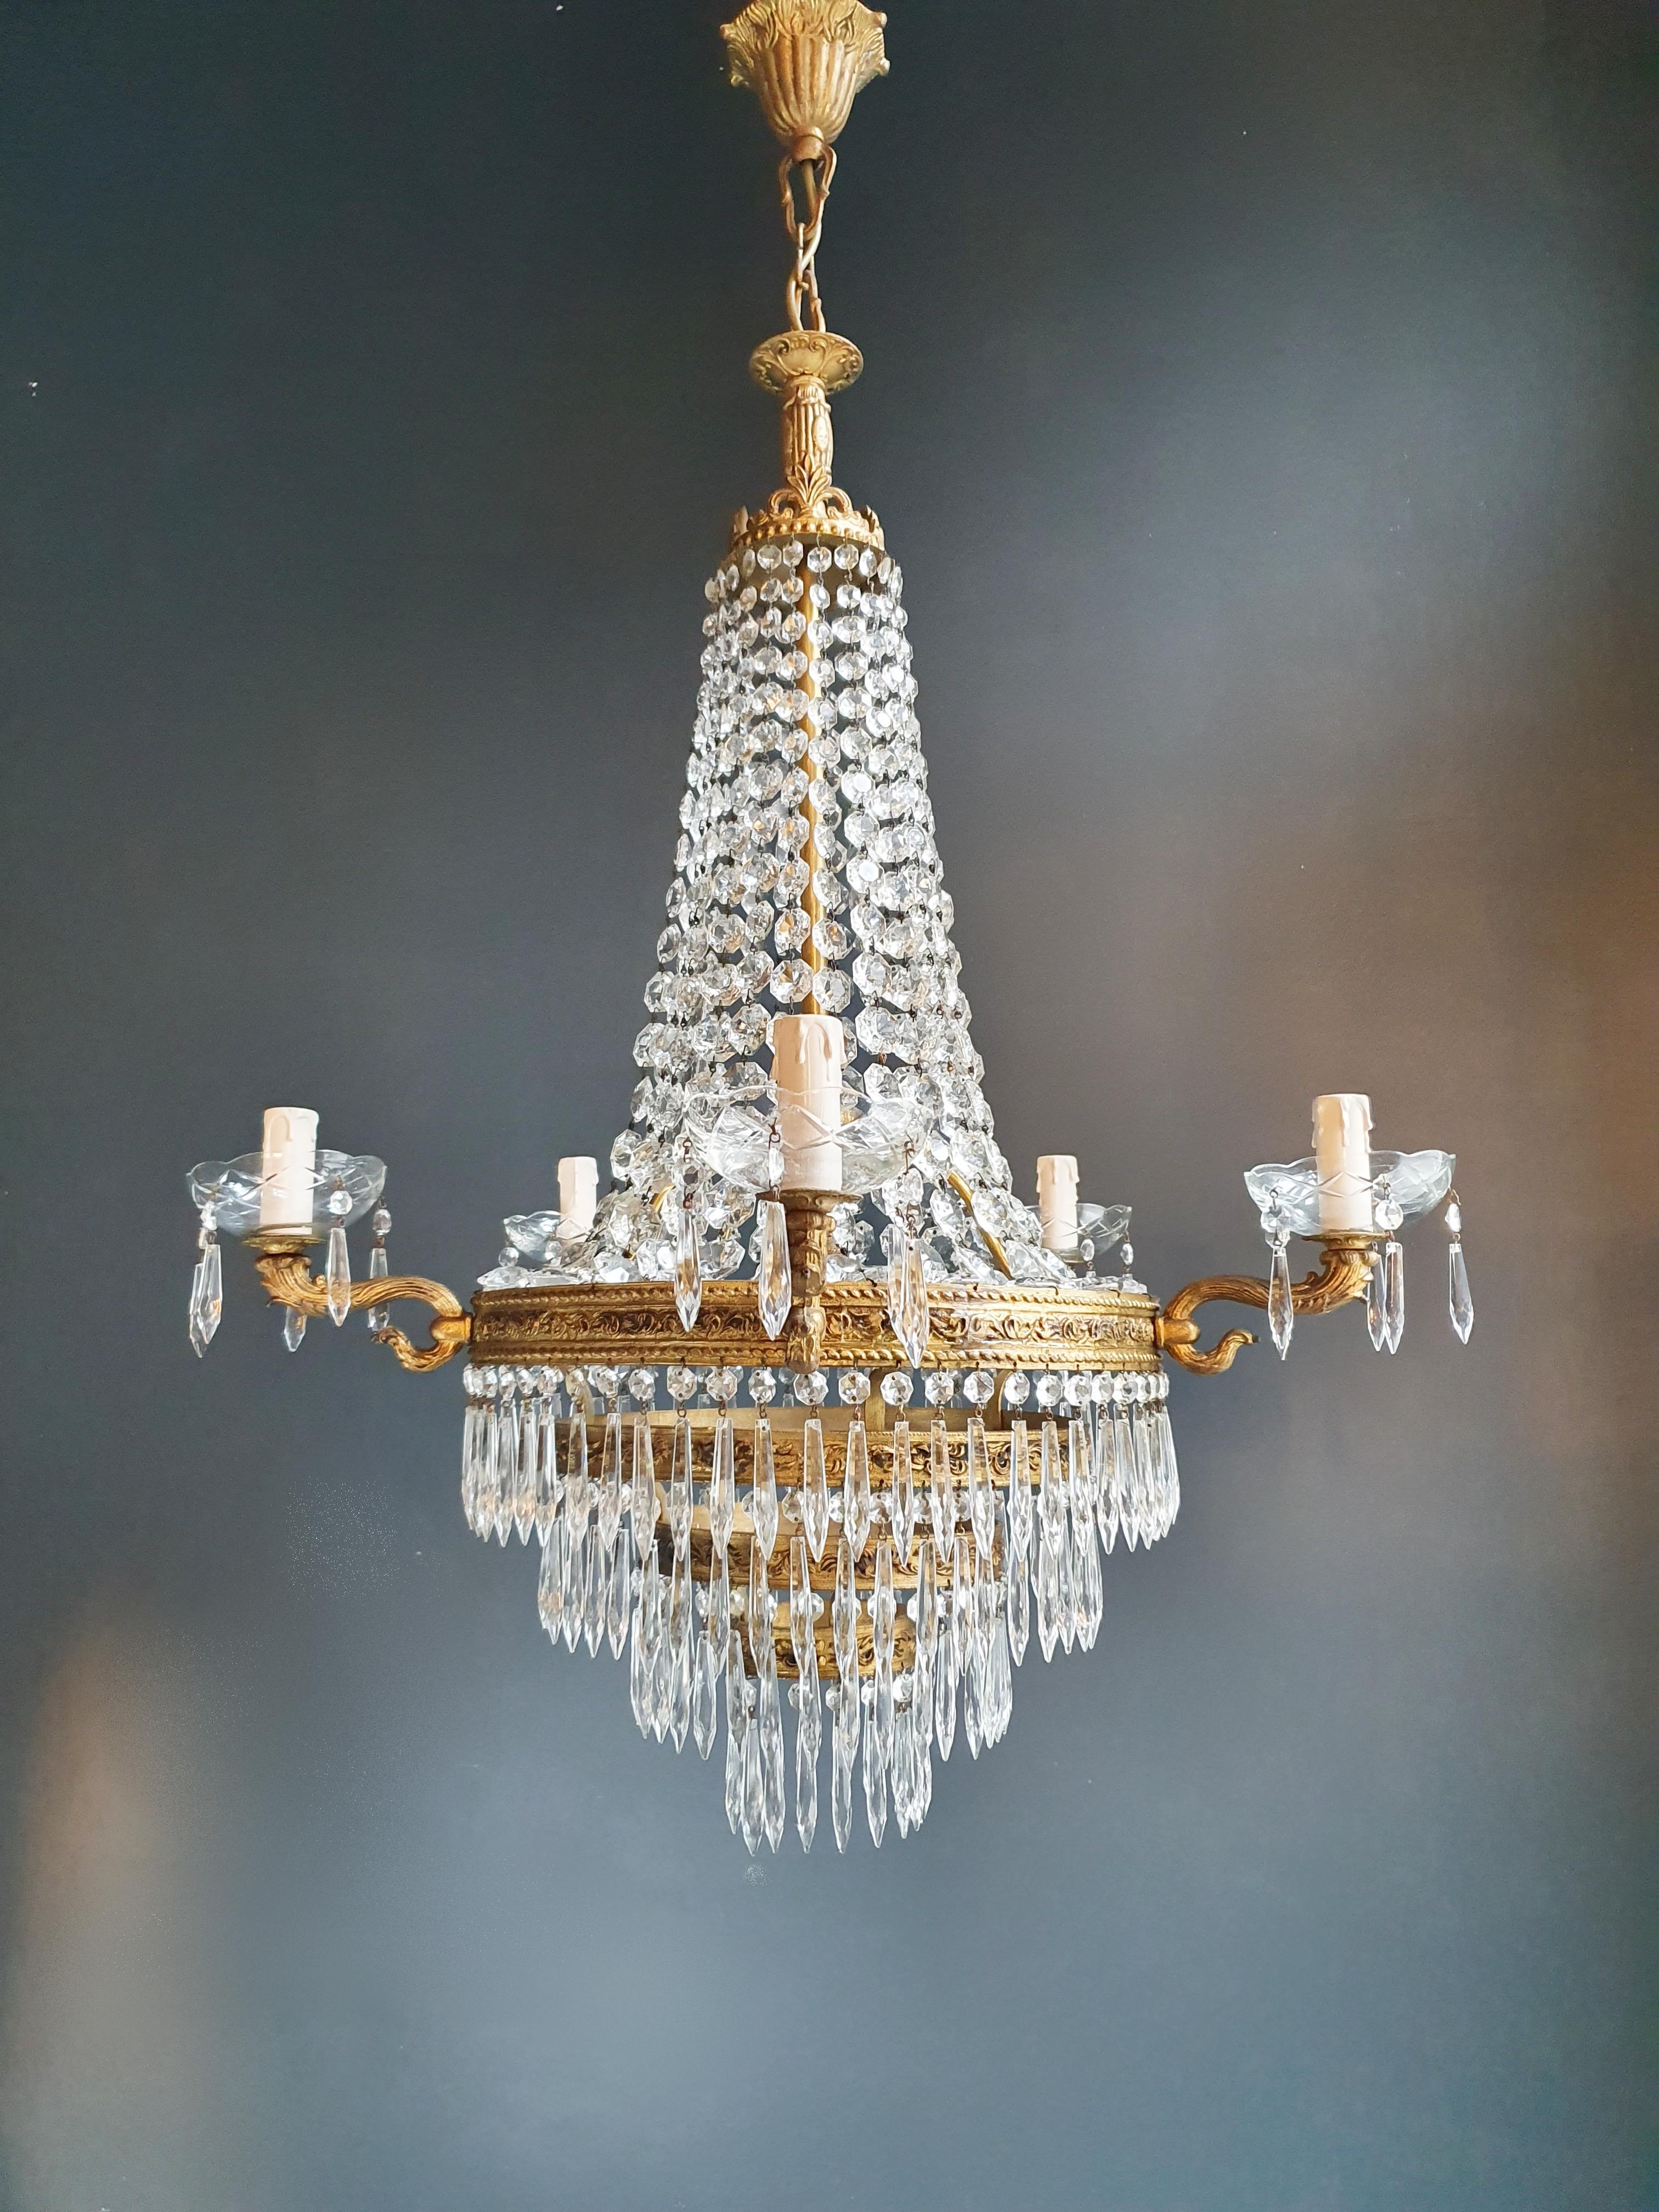 Montgolfiè Empire Sac a Pearl Chandelier Crystal Lustre Ceiling Lamp Antique For Sale 1